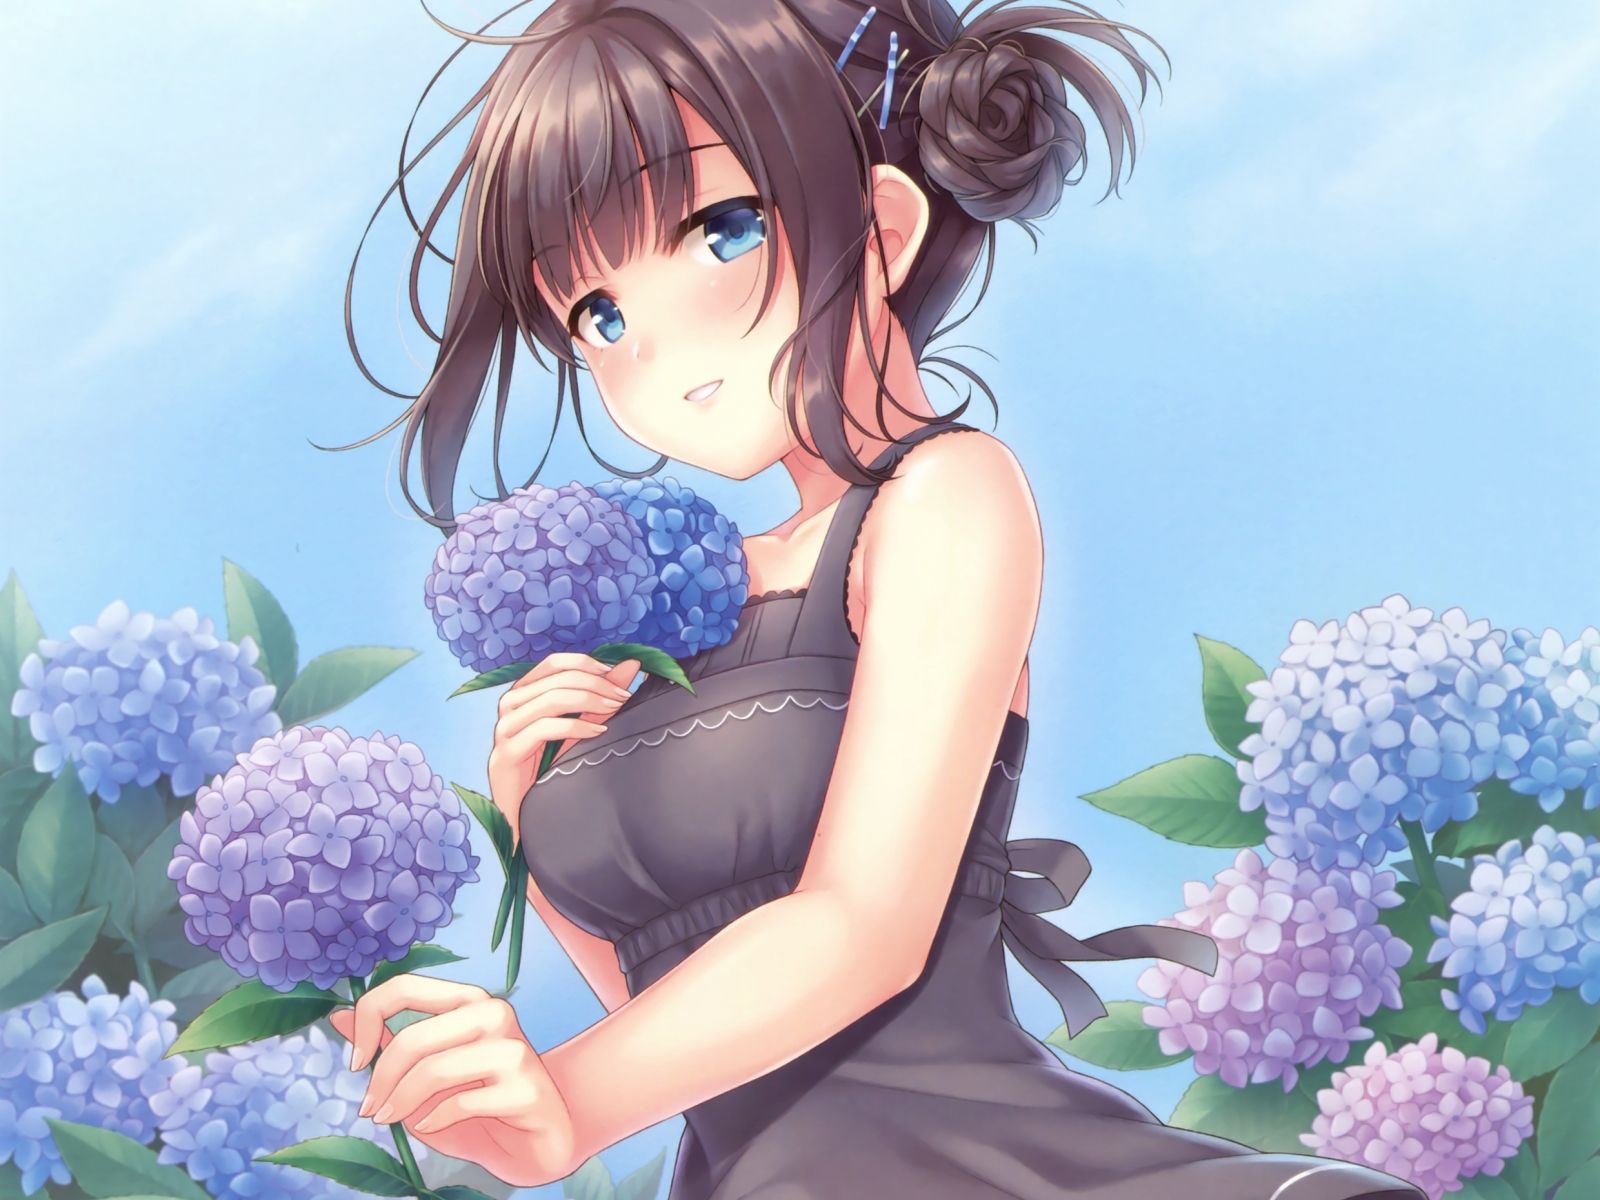 Download 1600x1200 wallpaper flowers, blue, cute anime girl, standard 4: fullscreen, 1600x1200 HD image, background, 3873